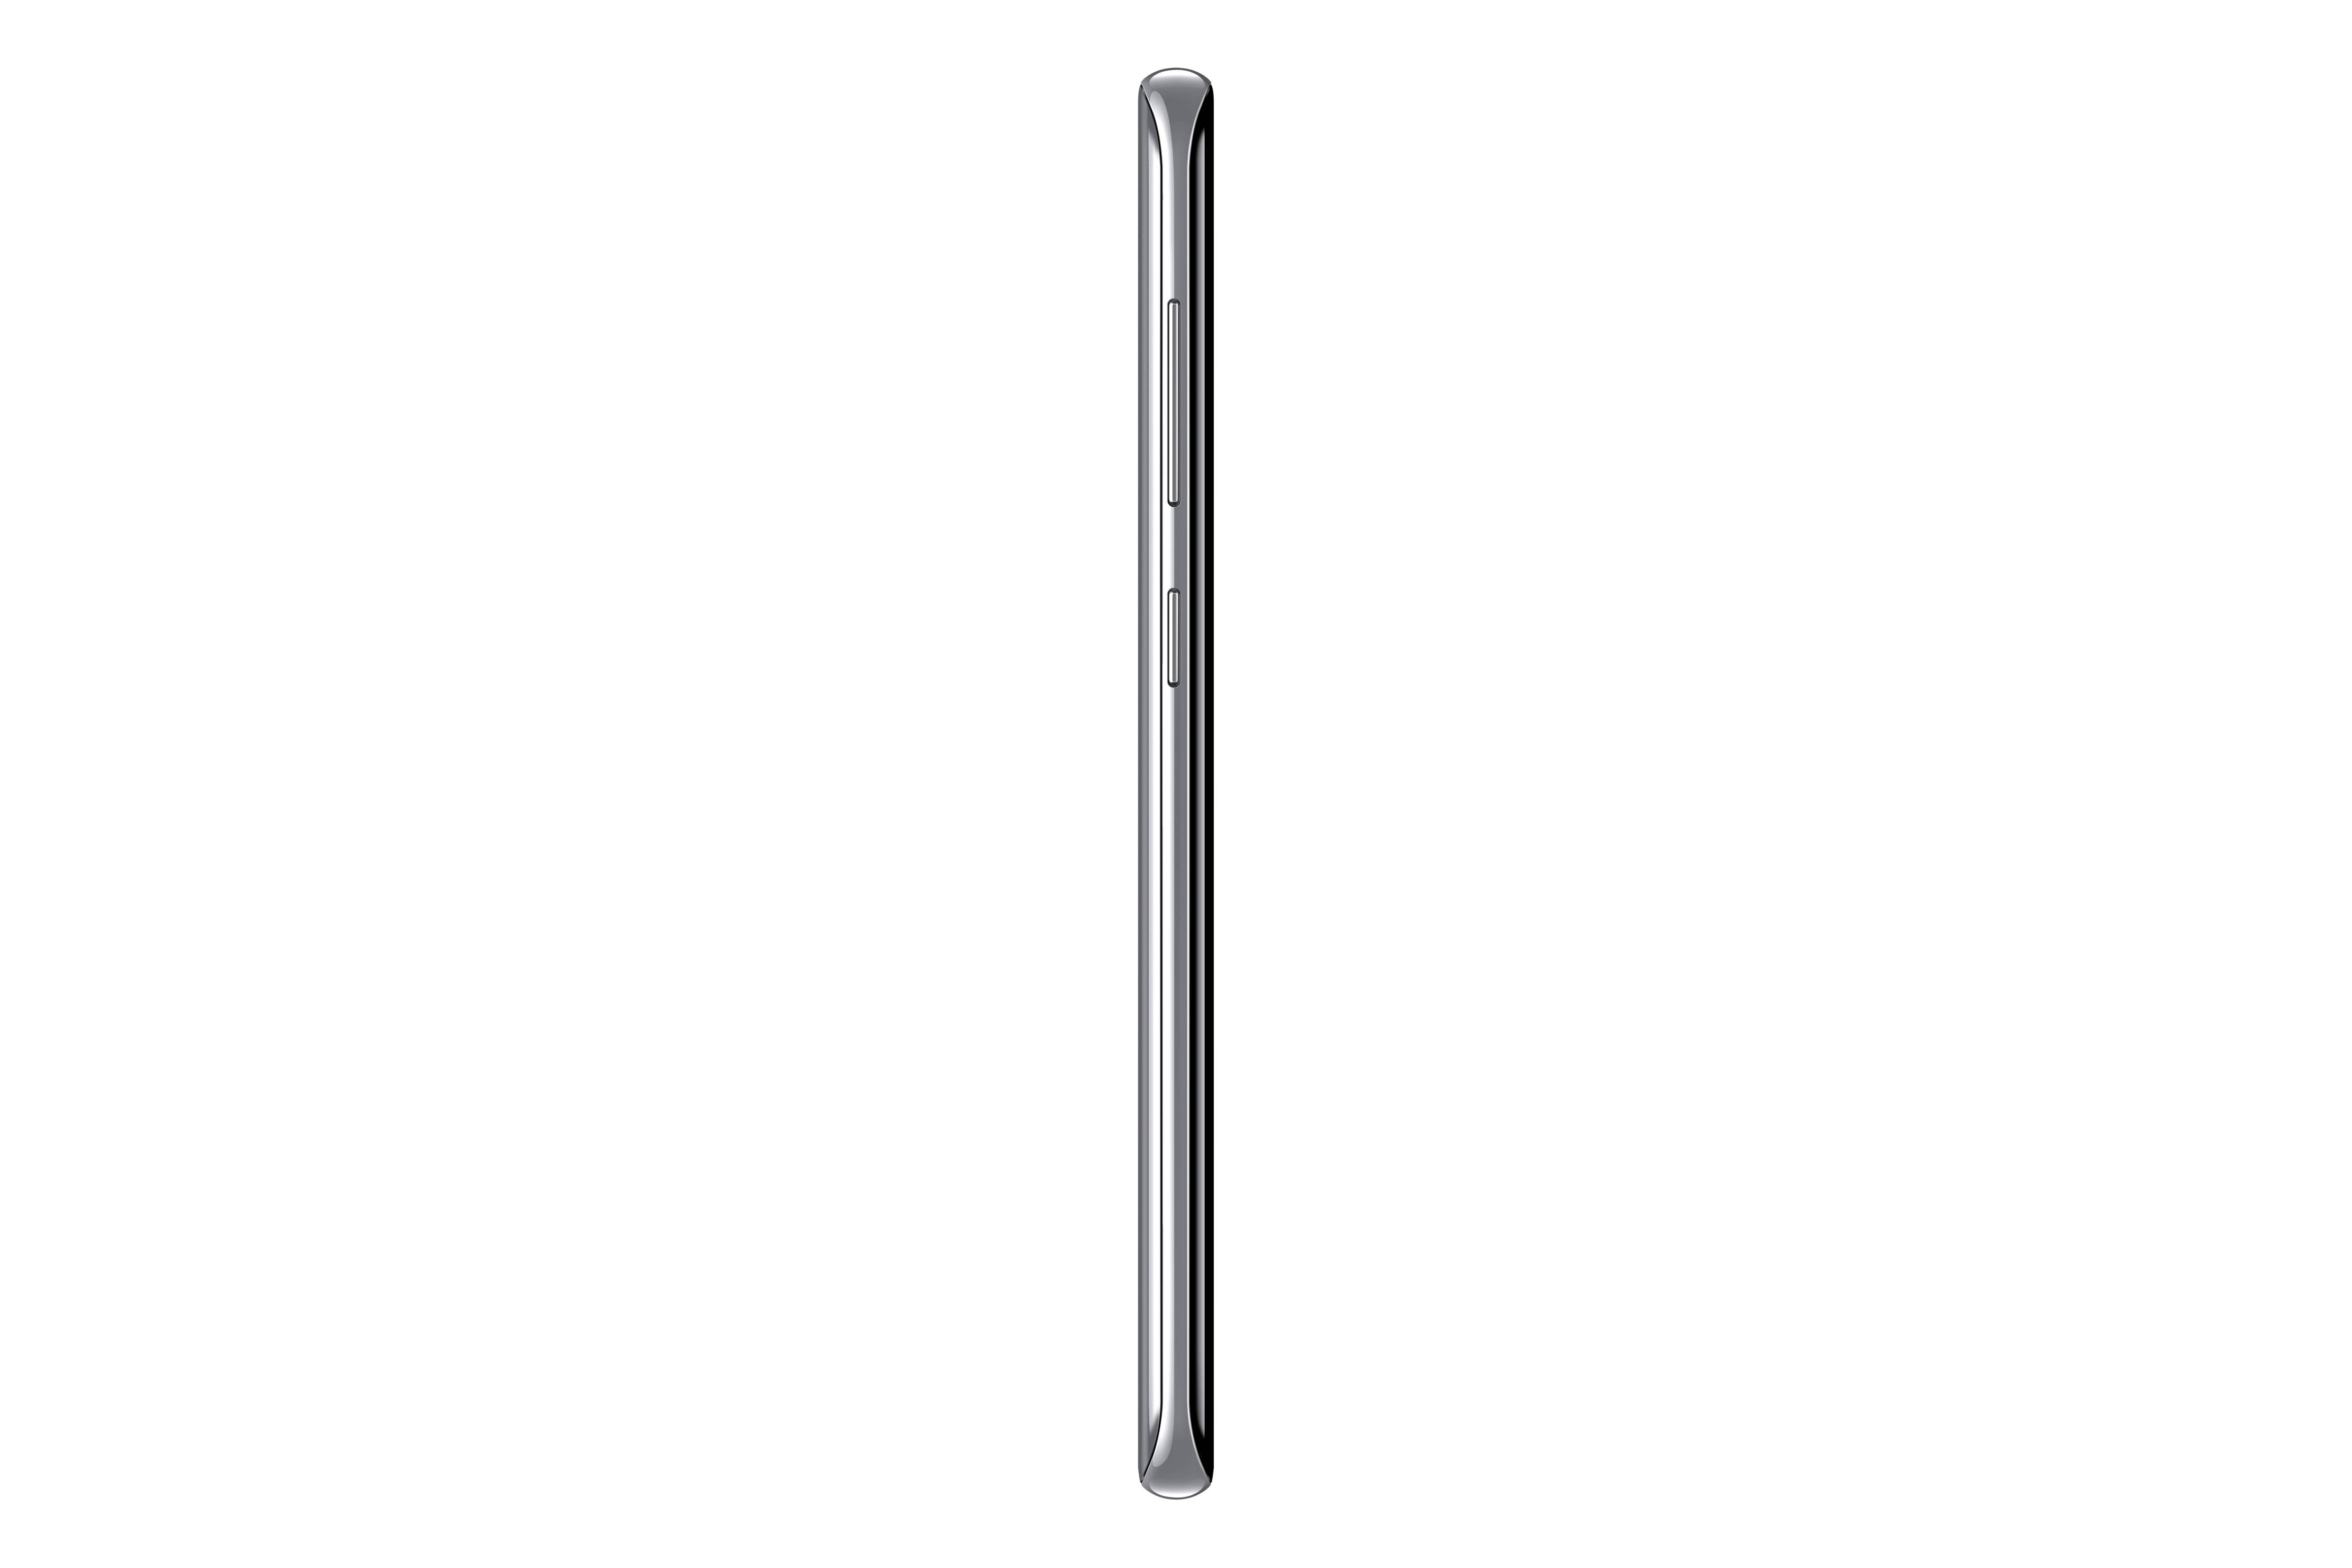 Samsung Galaxy S8, Silver (Sprint) - image 4 of 5